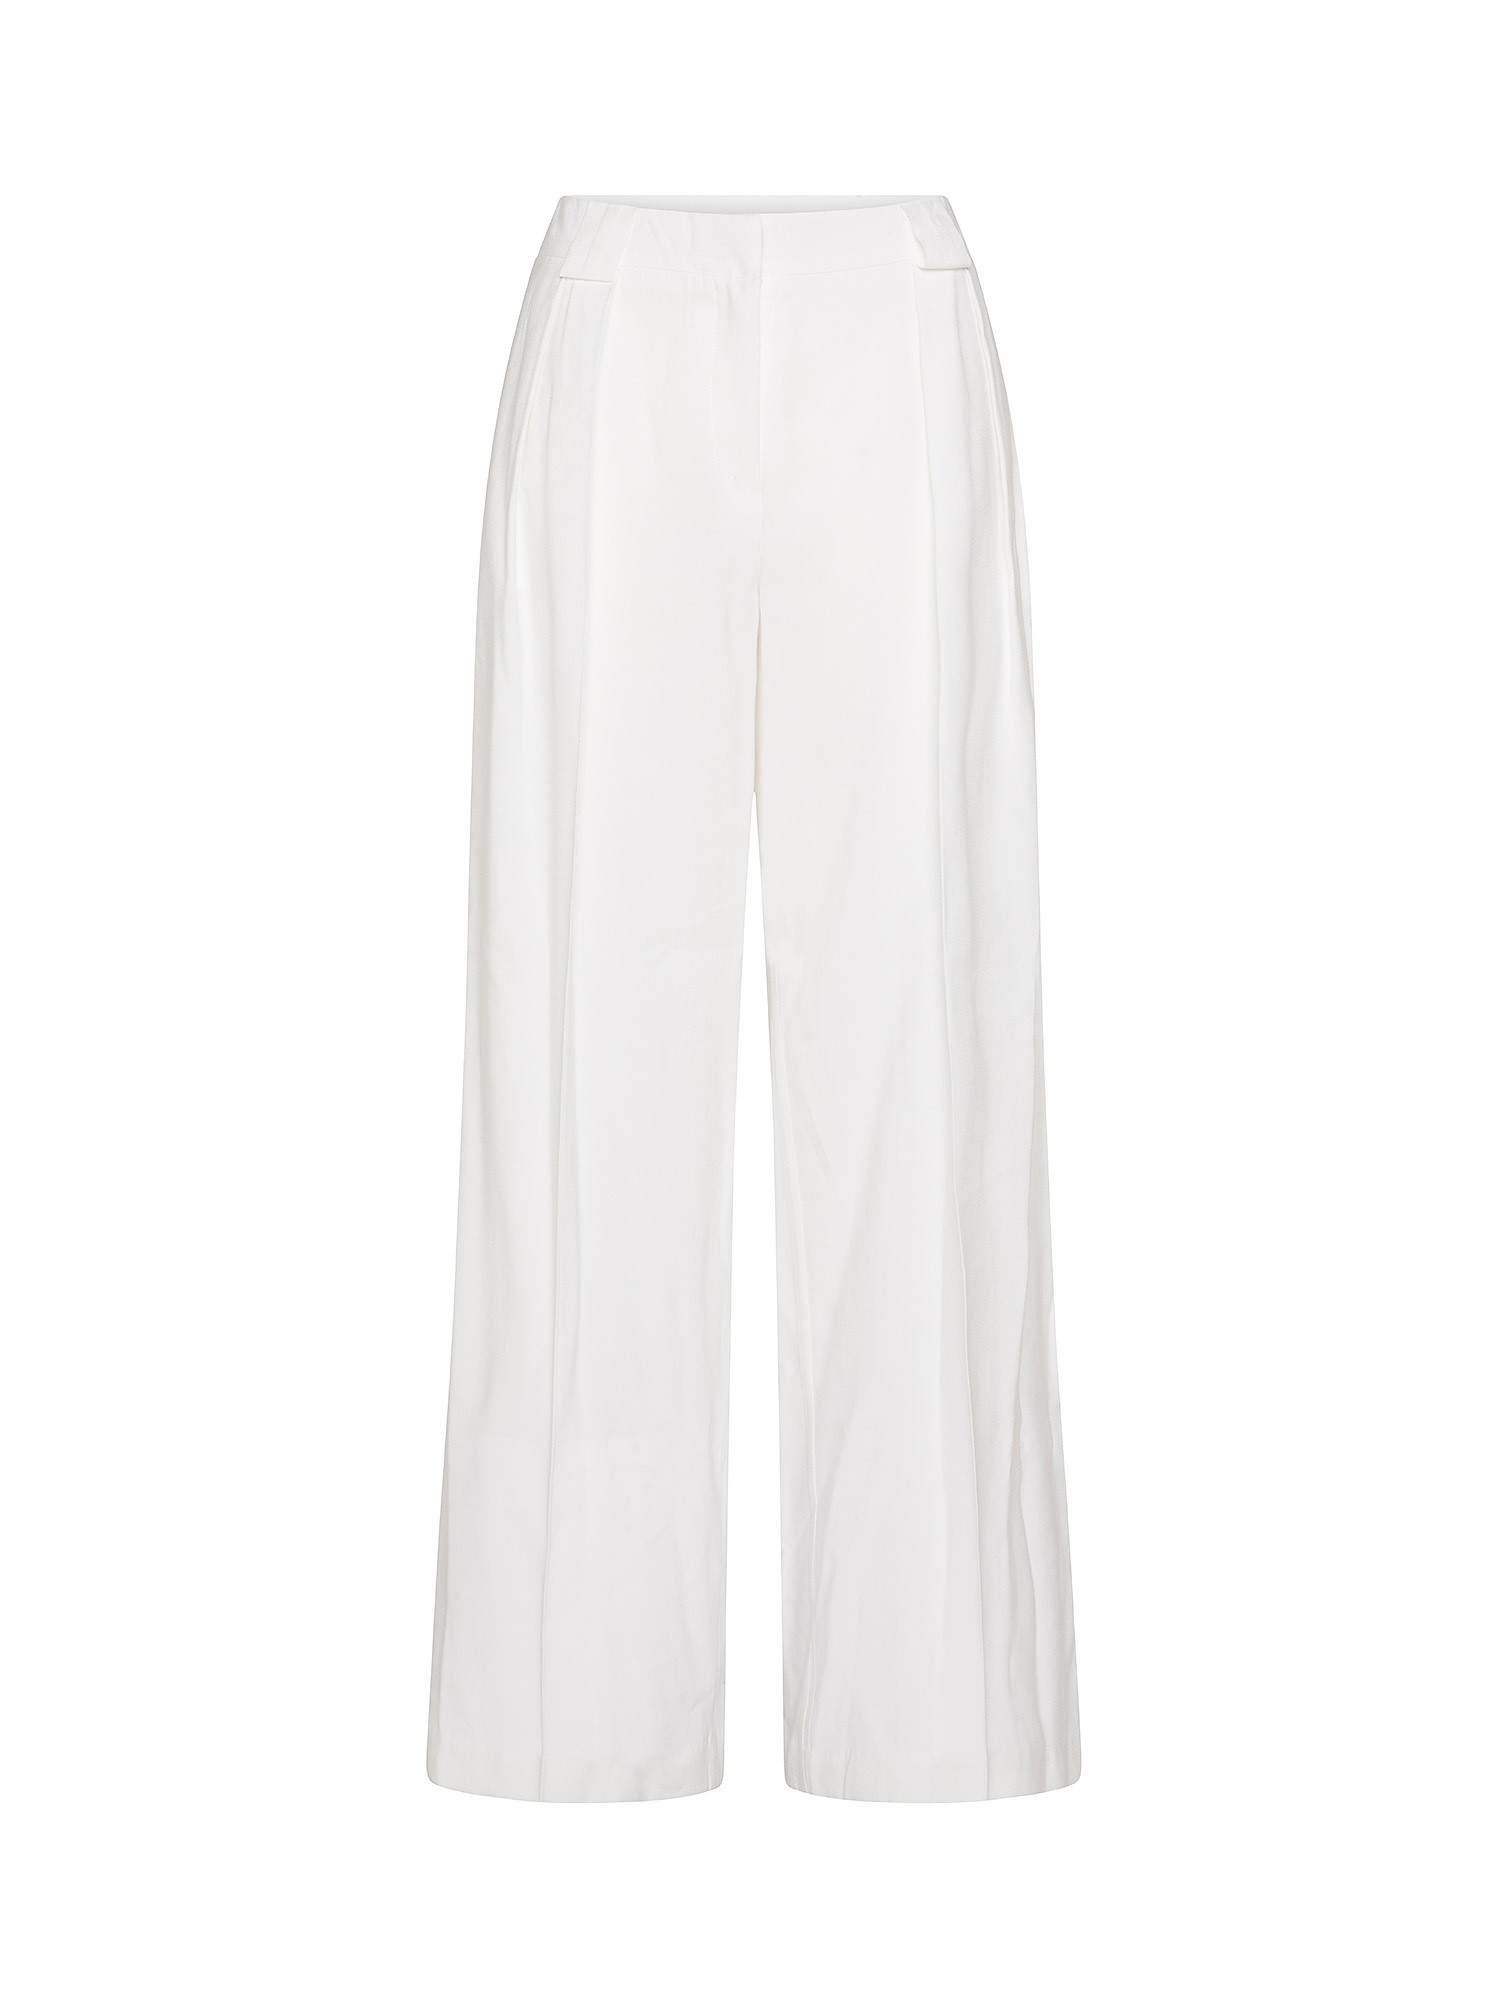 Pantalone, Bianco, large image number 0